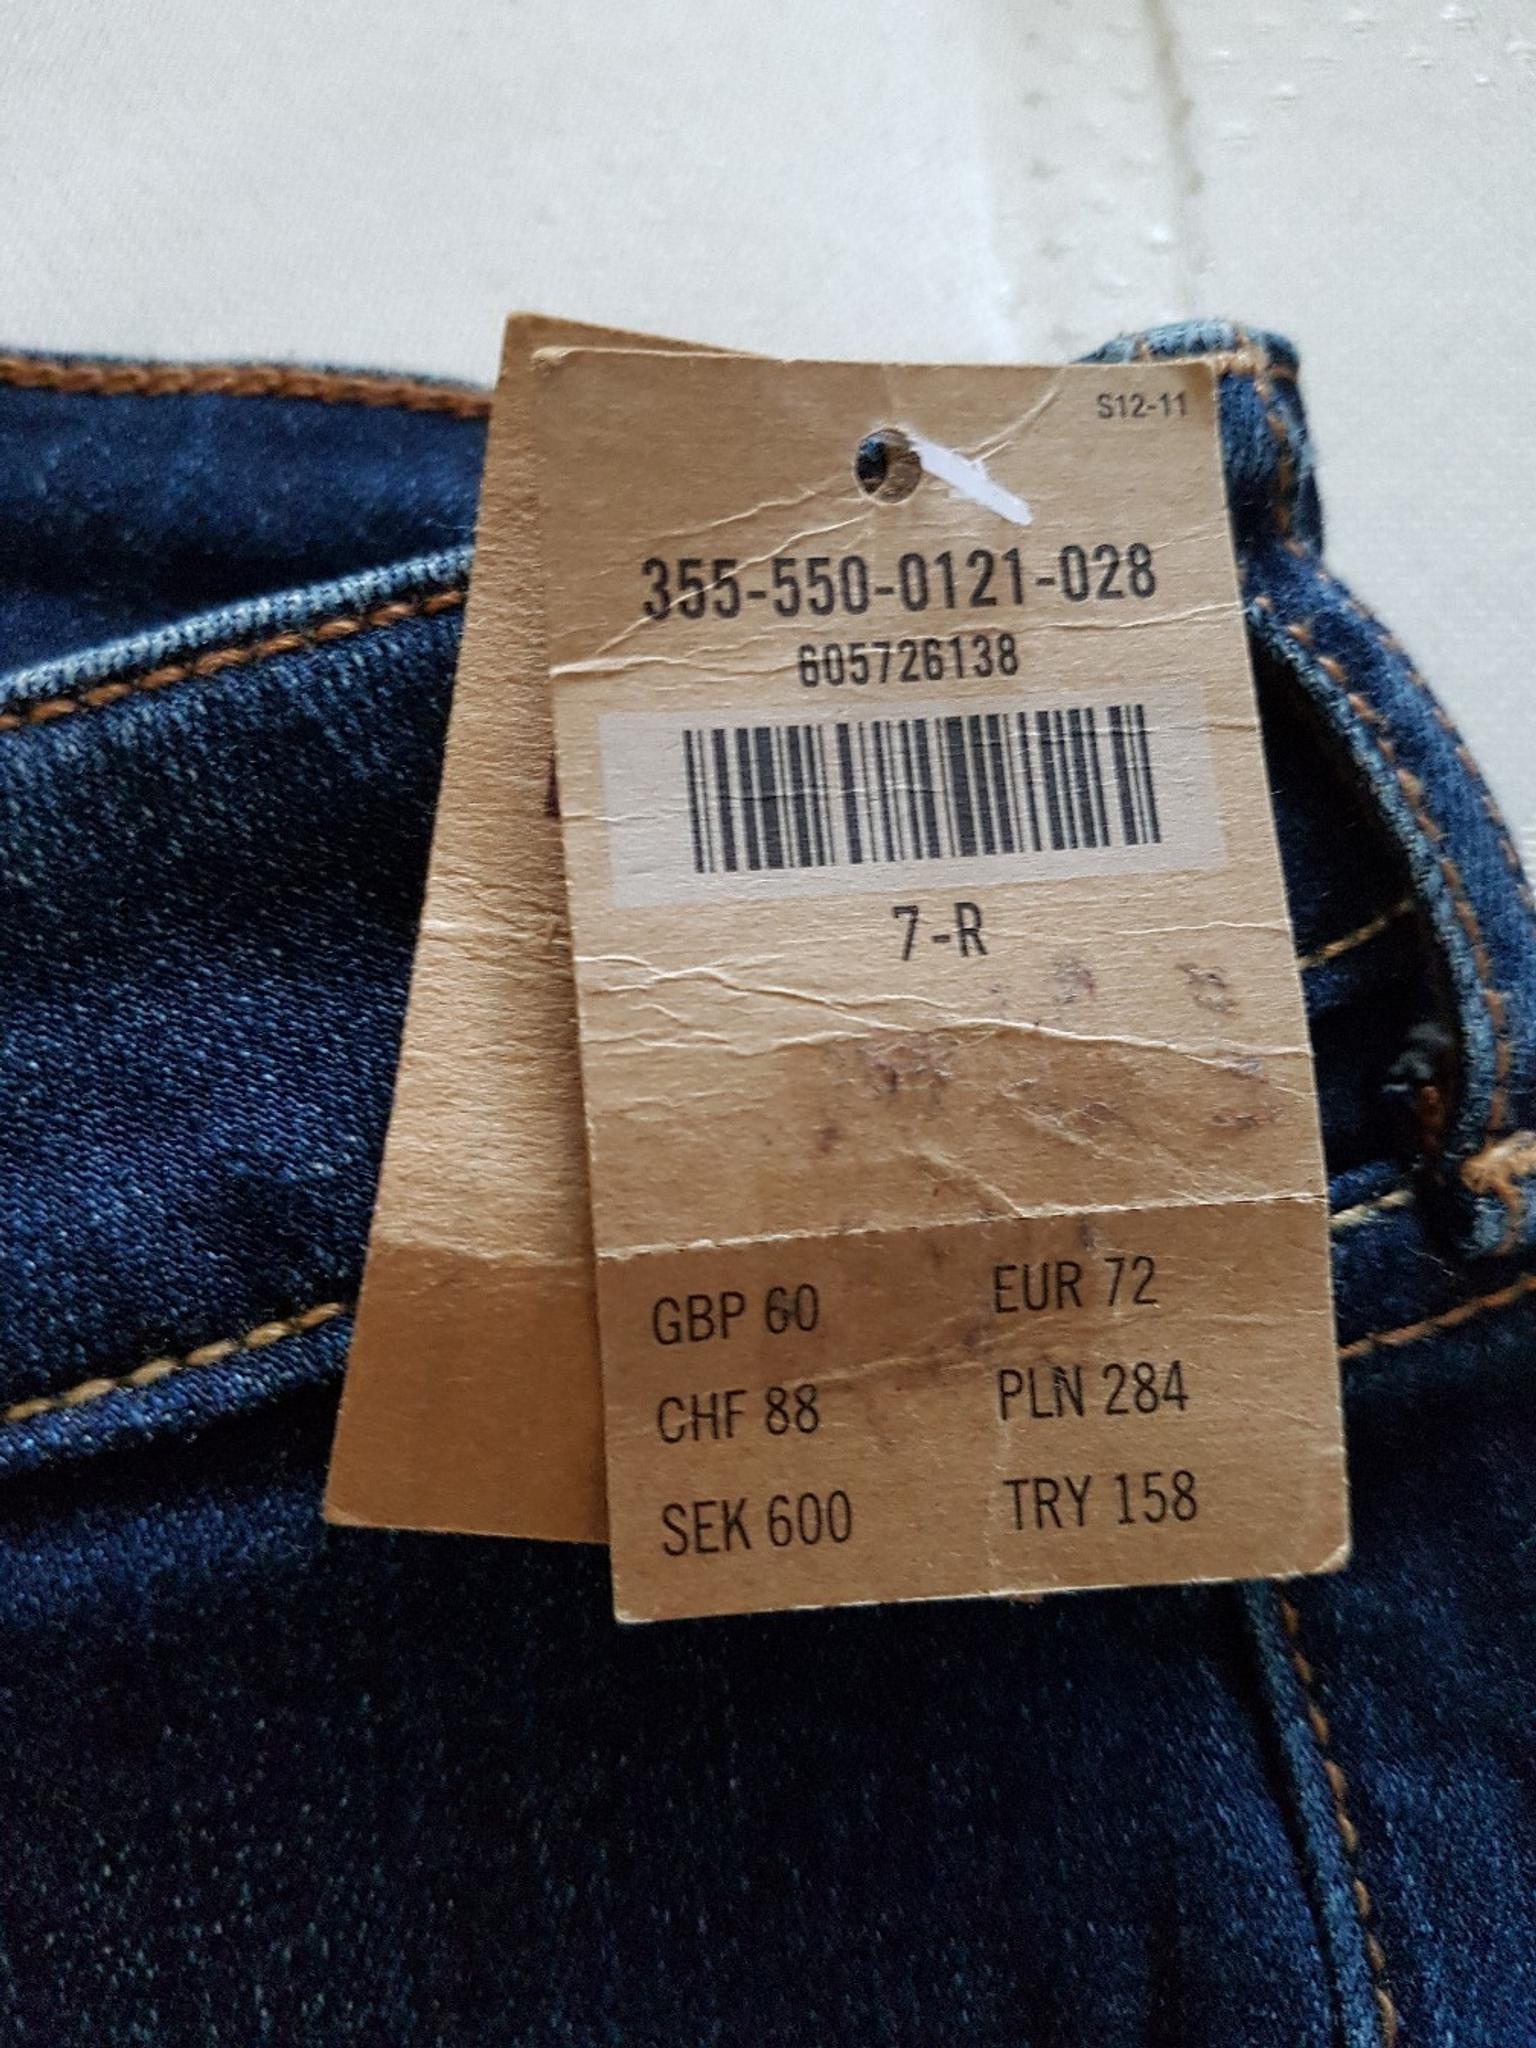 hollister jeans price